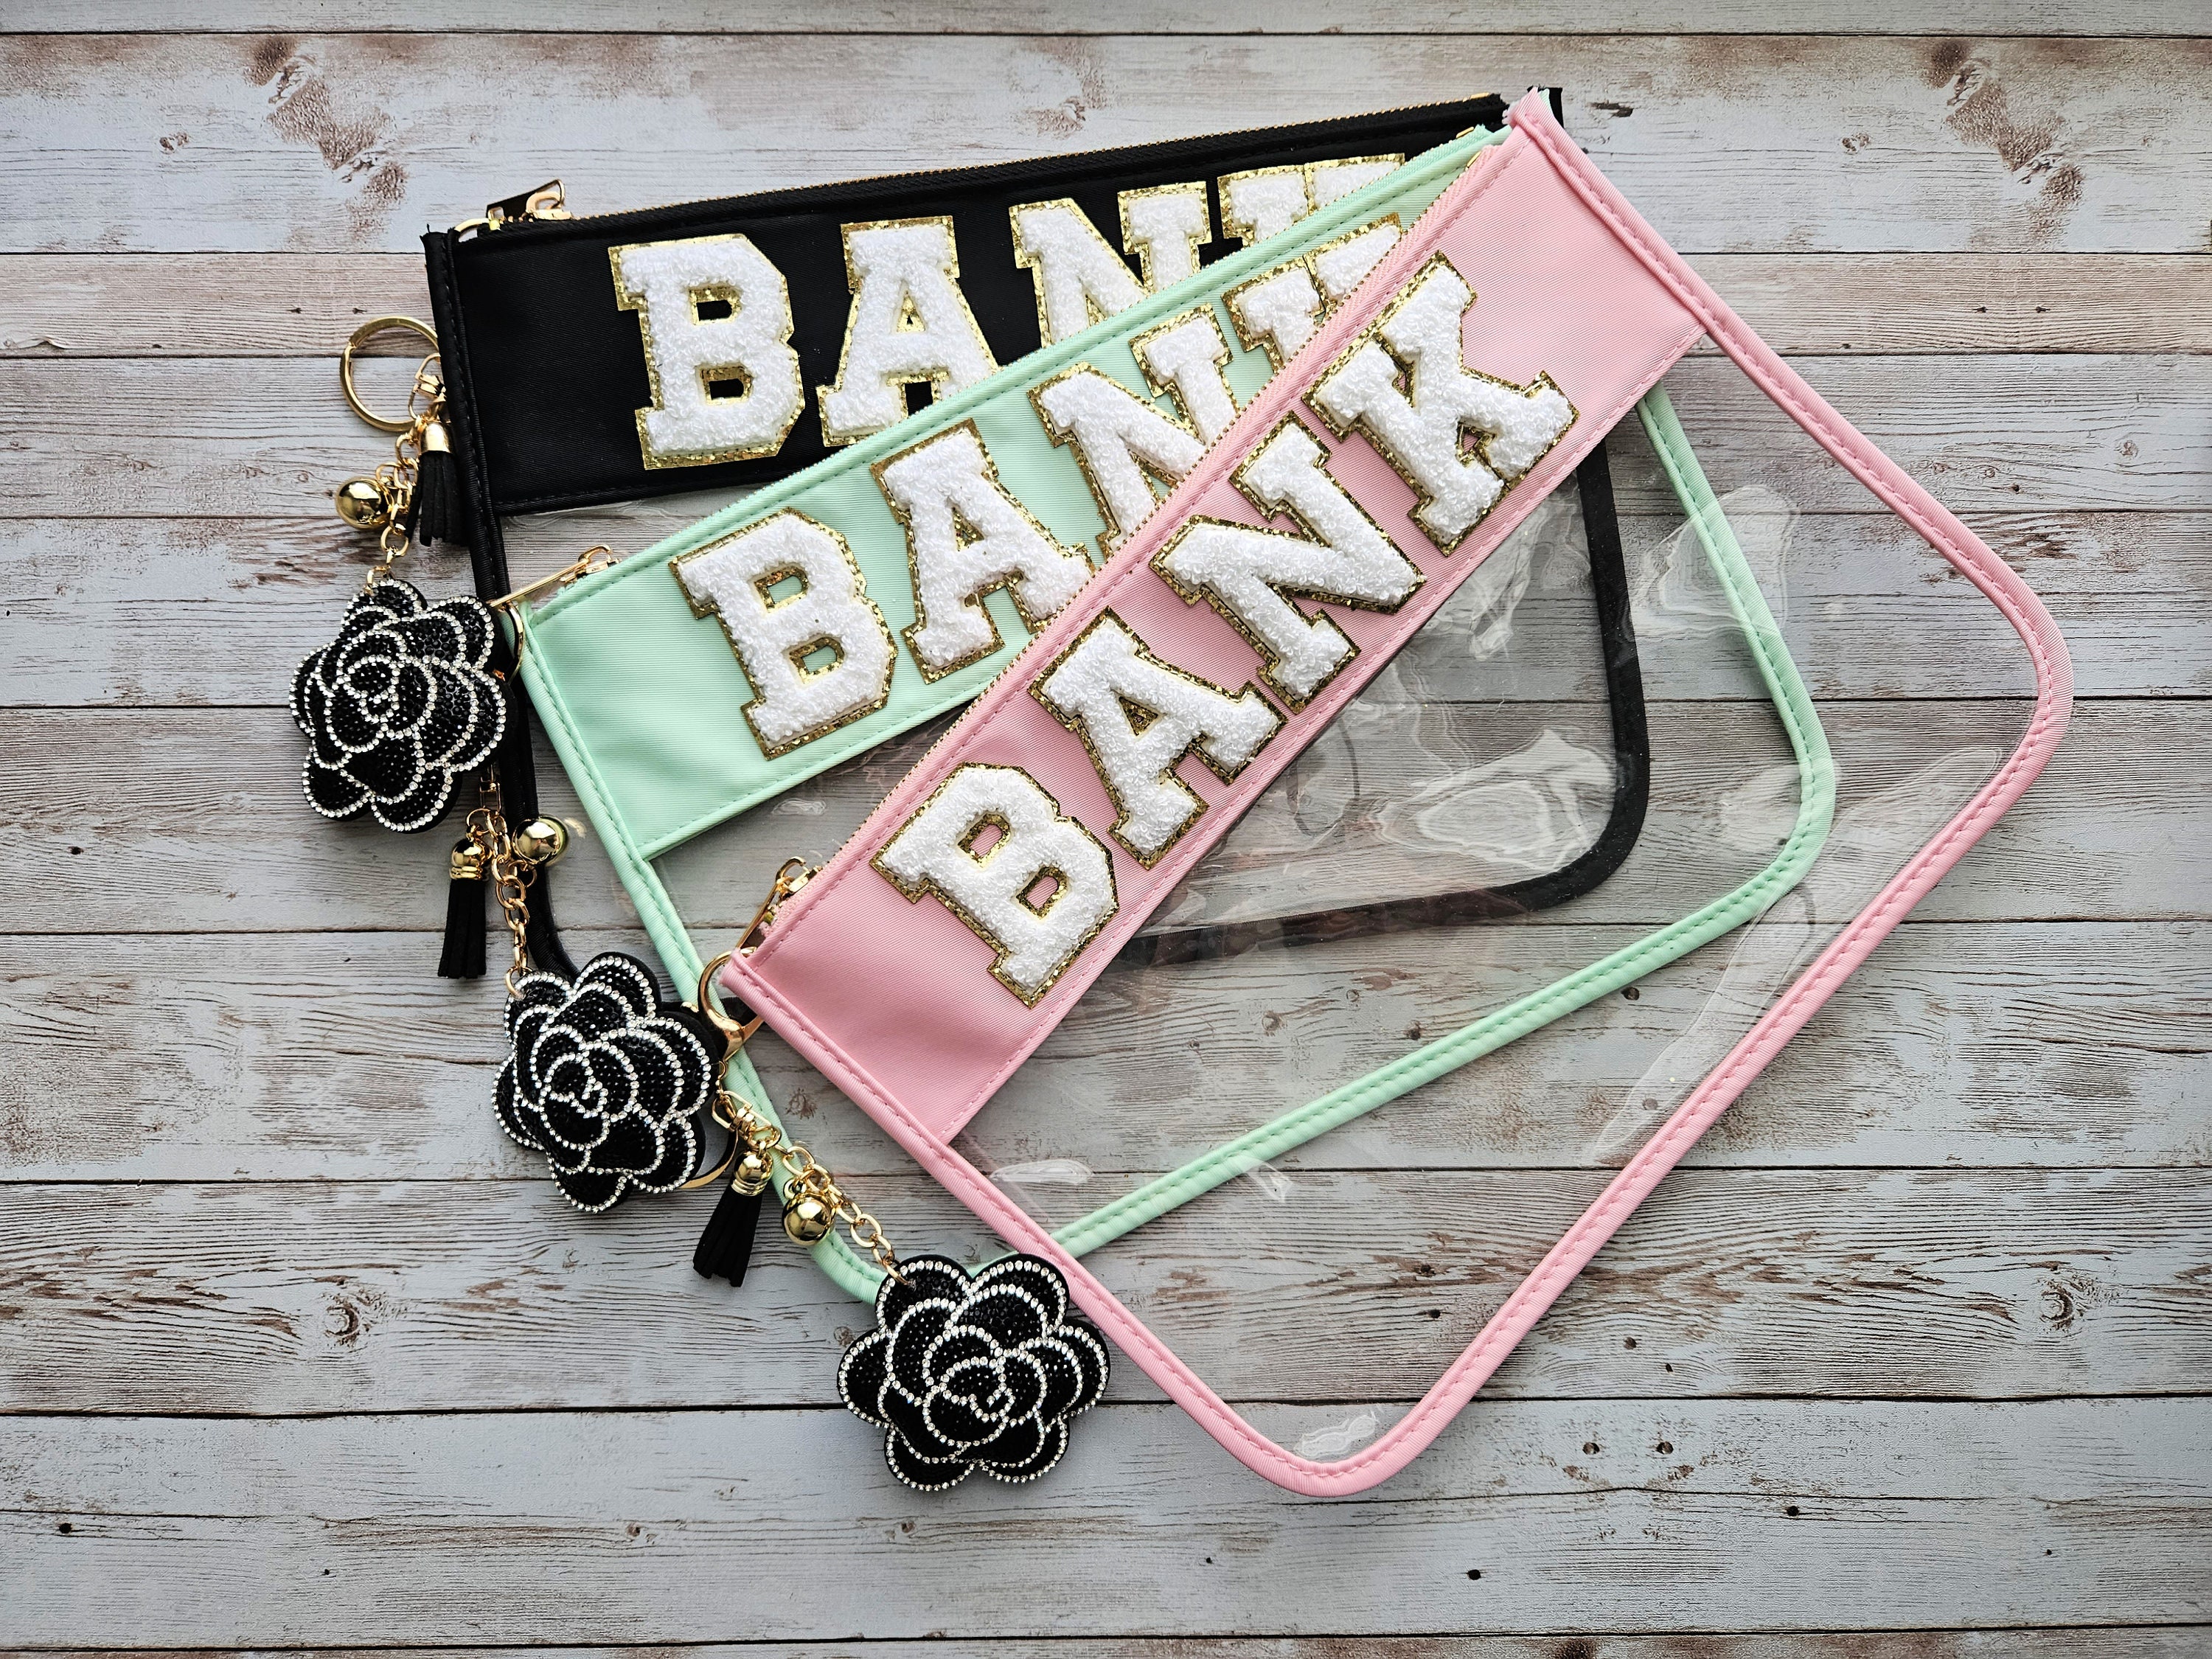  Sweetude 12 Pcs Bank Deposit Money Bags with Zipper